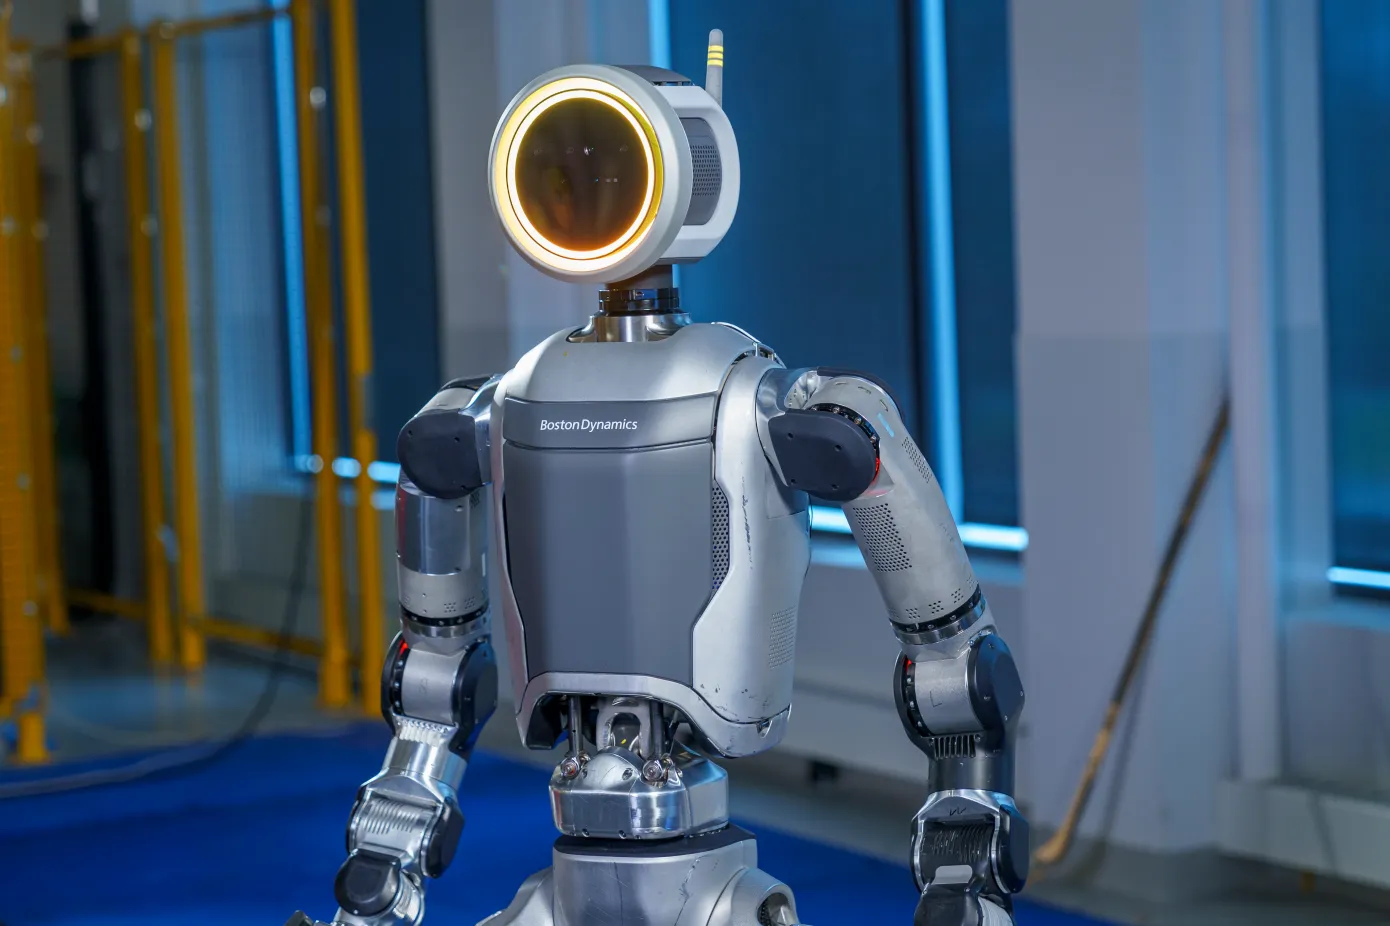 Bostan Dynamic's Atlas Humanoid Robot Goes Electric, AI News, Arcot Group
